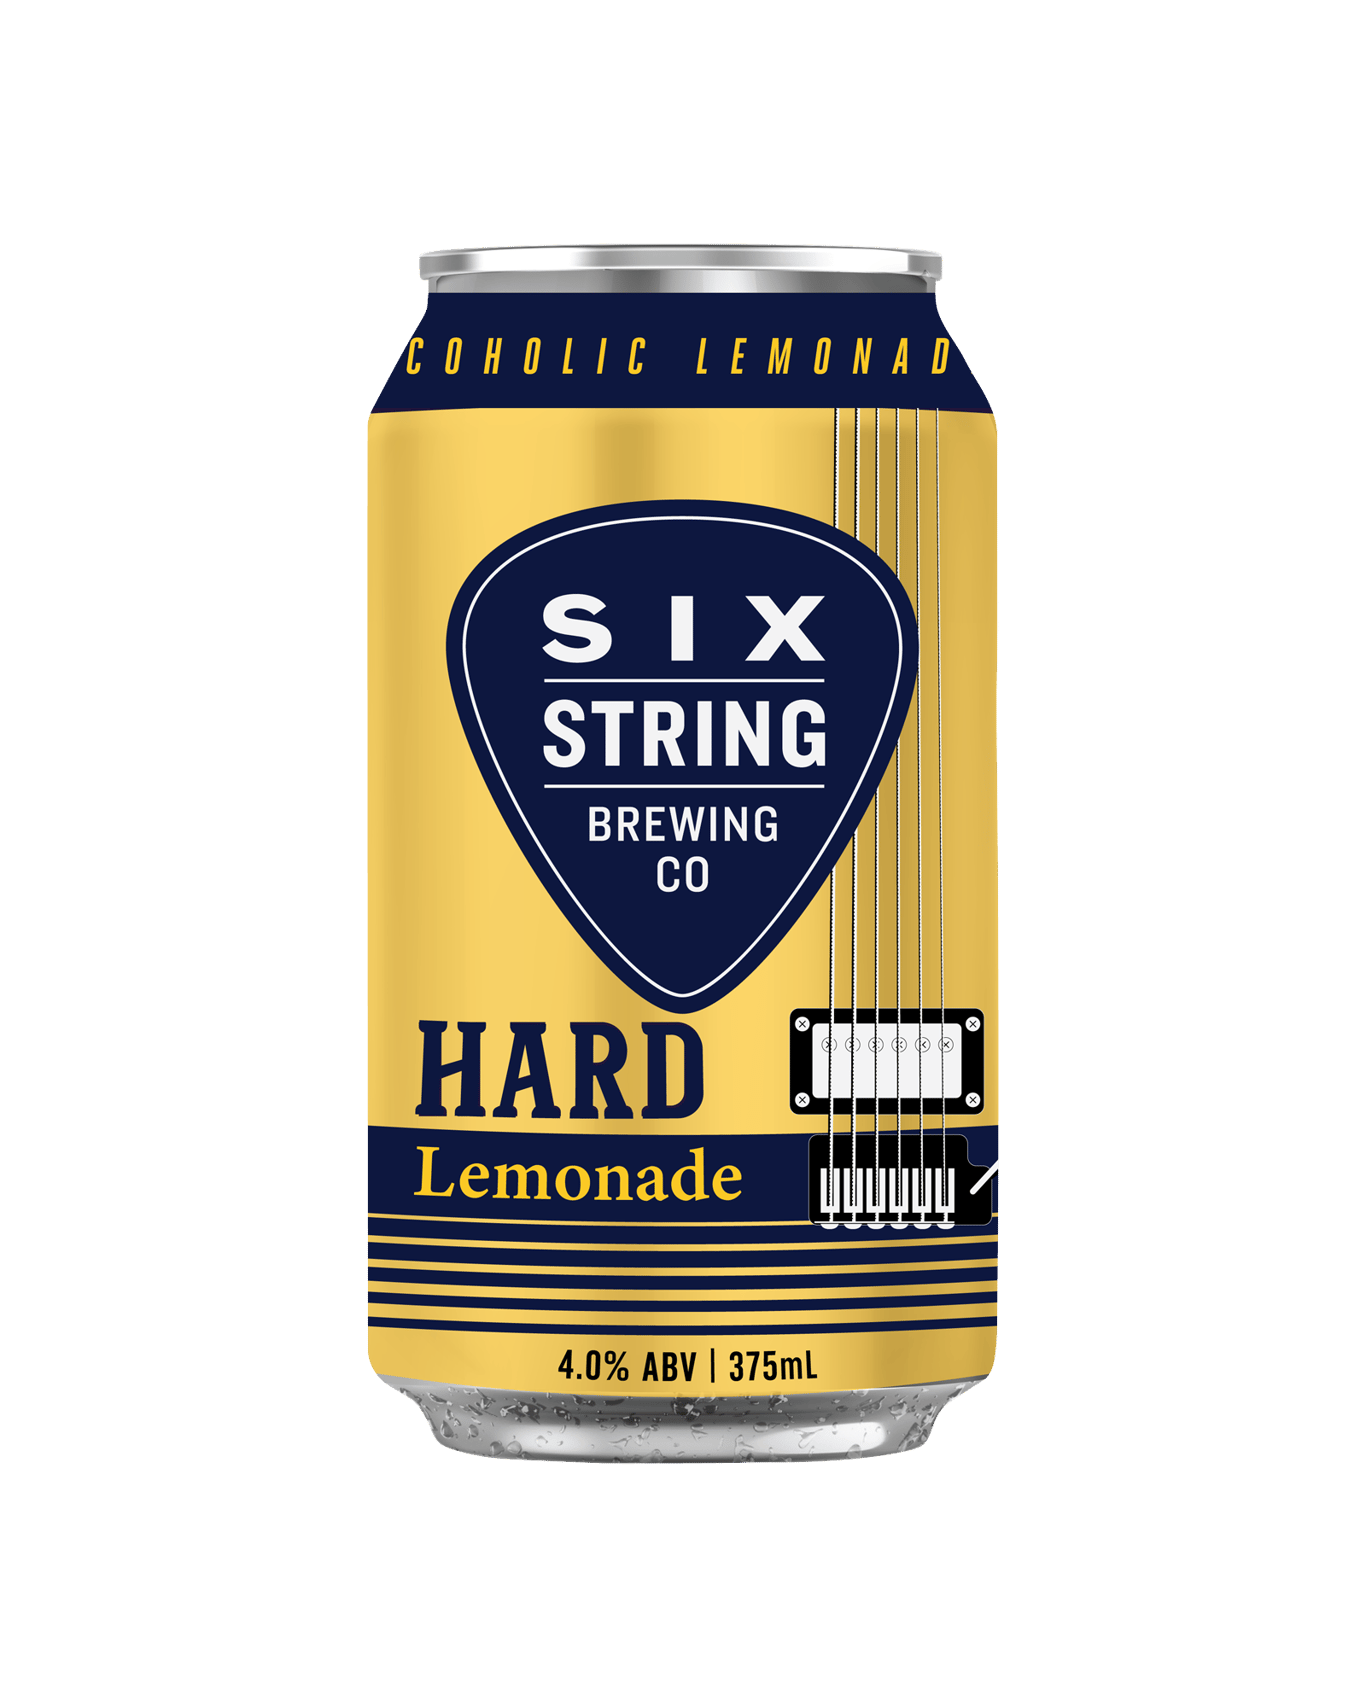 Buy Six String Brewing Co Hard Lemonade 375ml Online Lowest Price Guarantee Best Deals